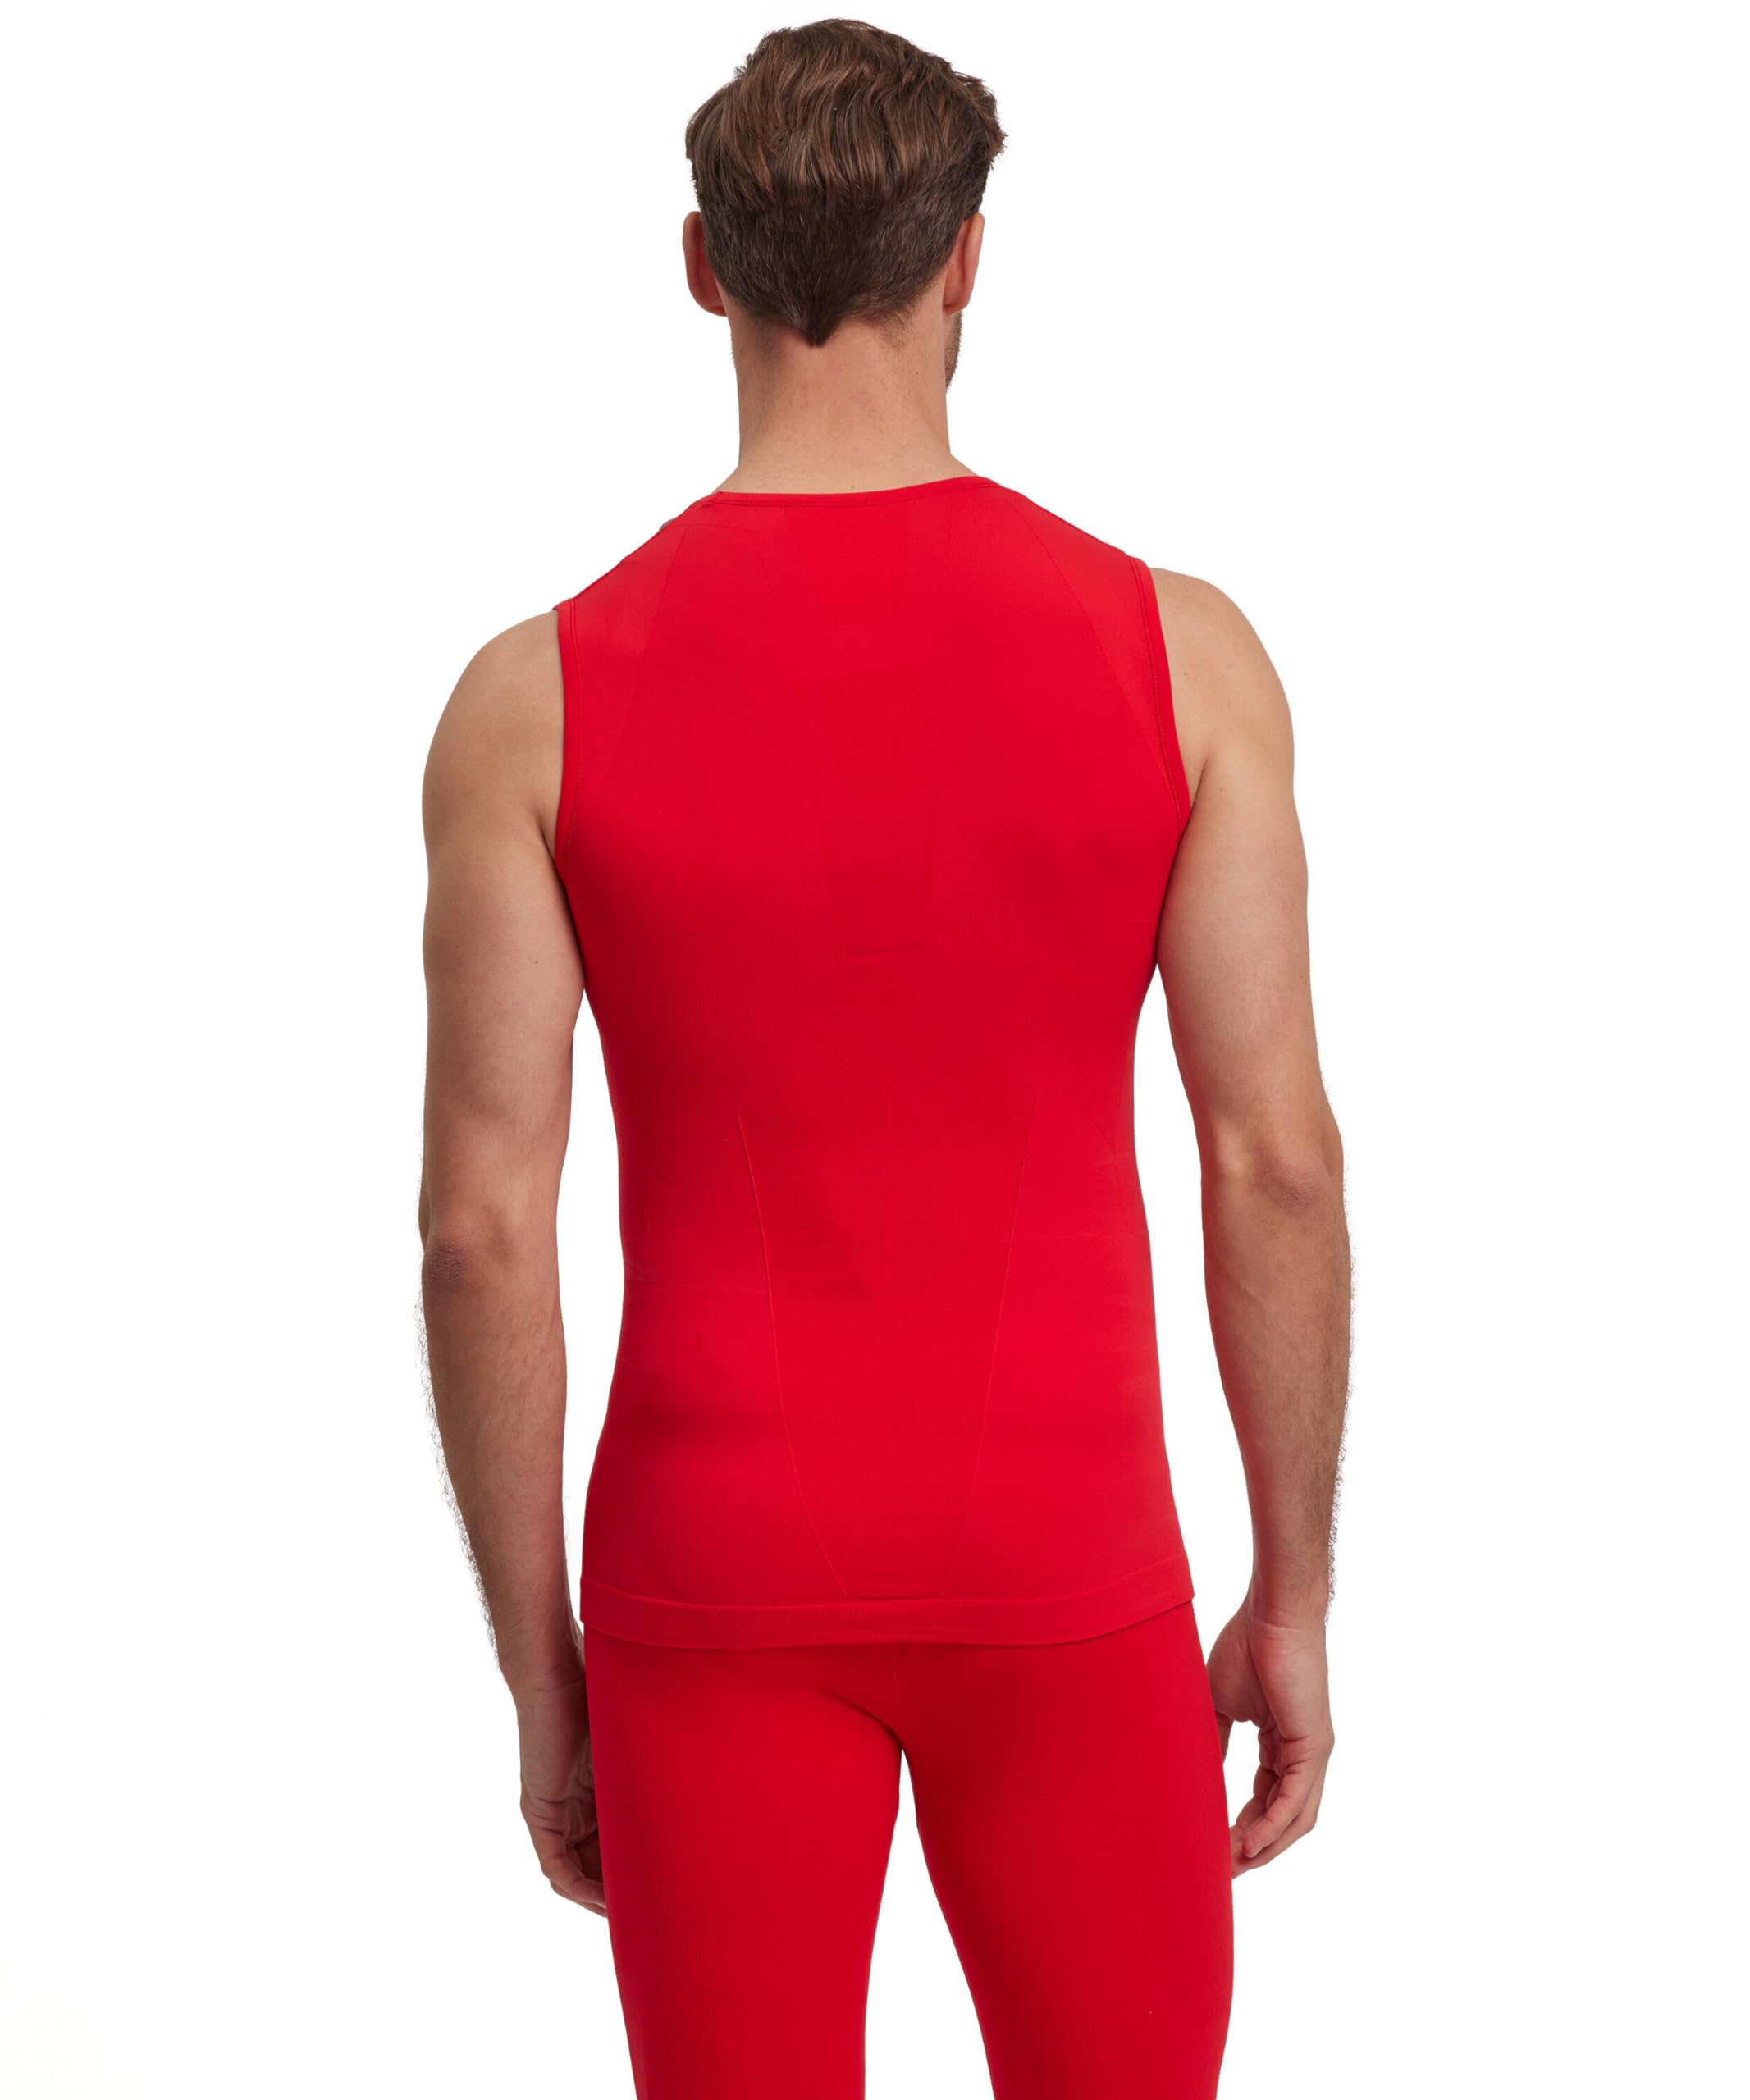 FALKE Herren Baselayer-Shirt Warm M S/L SH Funktionsgarn schnelltrocknend 1 Stück, Rot (Scarlet 8070), XXL